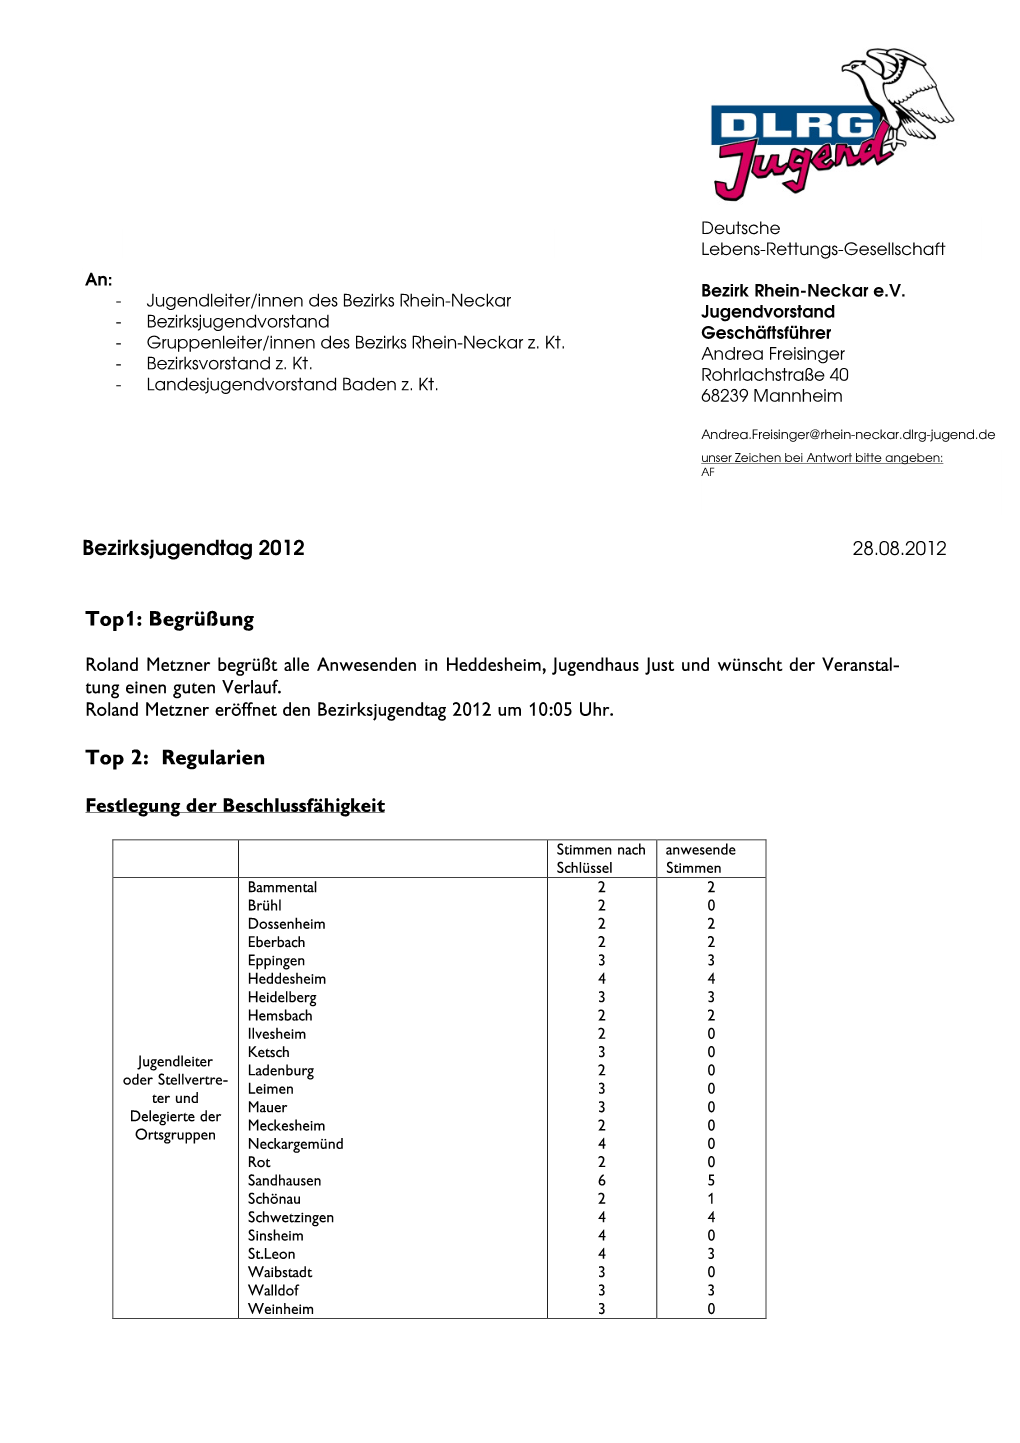 Protokoll Bezirksjugendtag 2012, Heddesheim Final